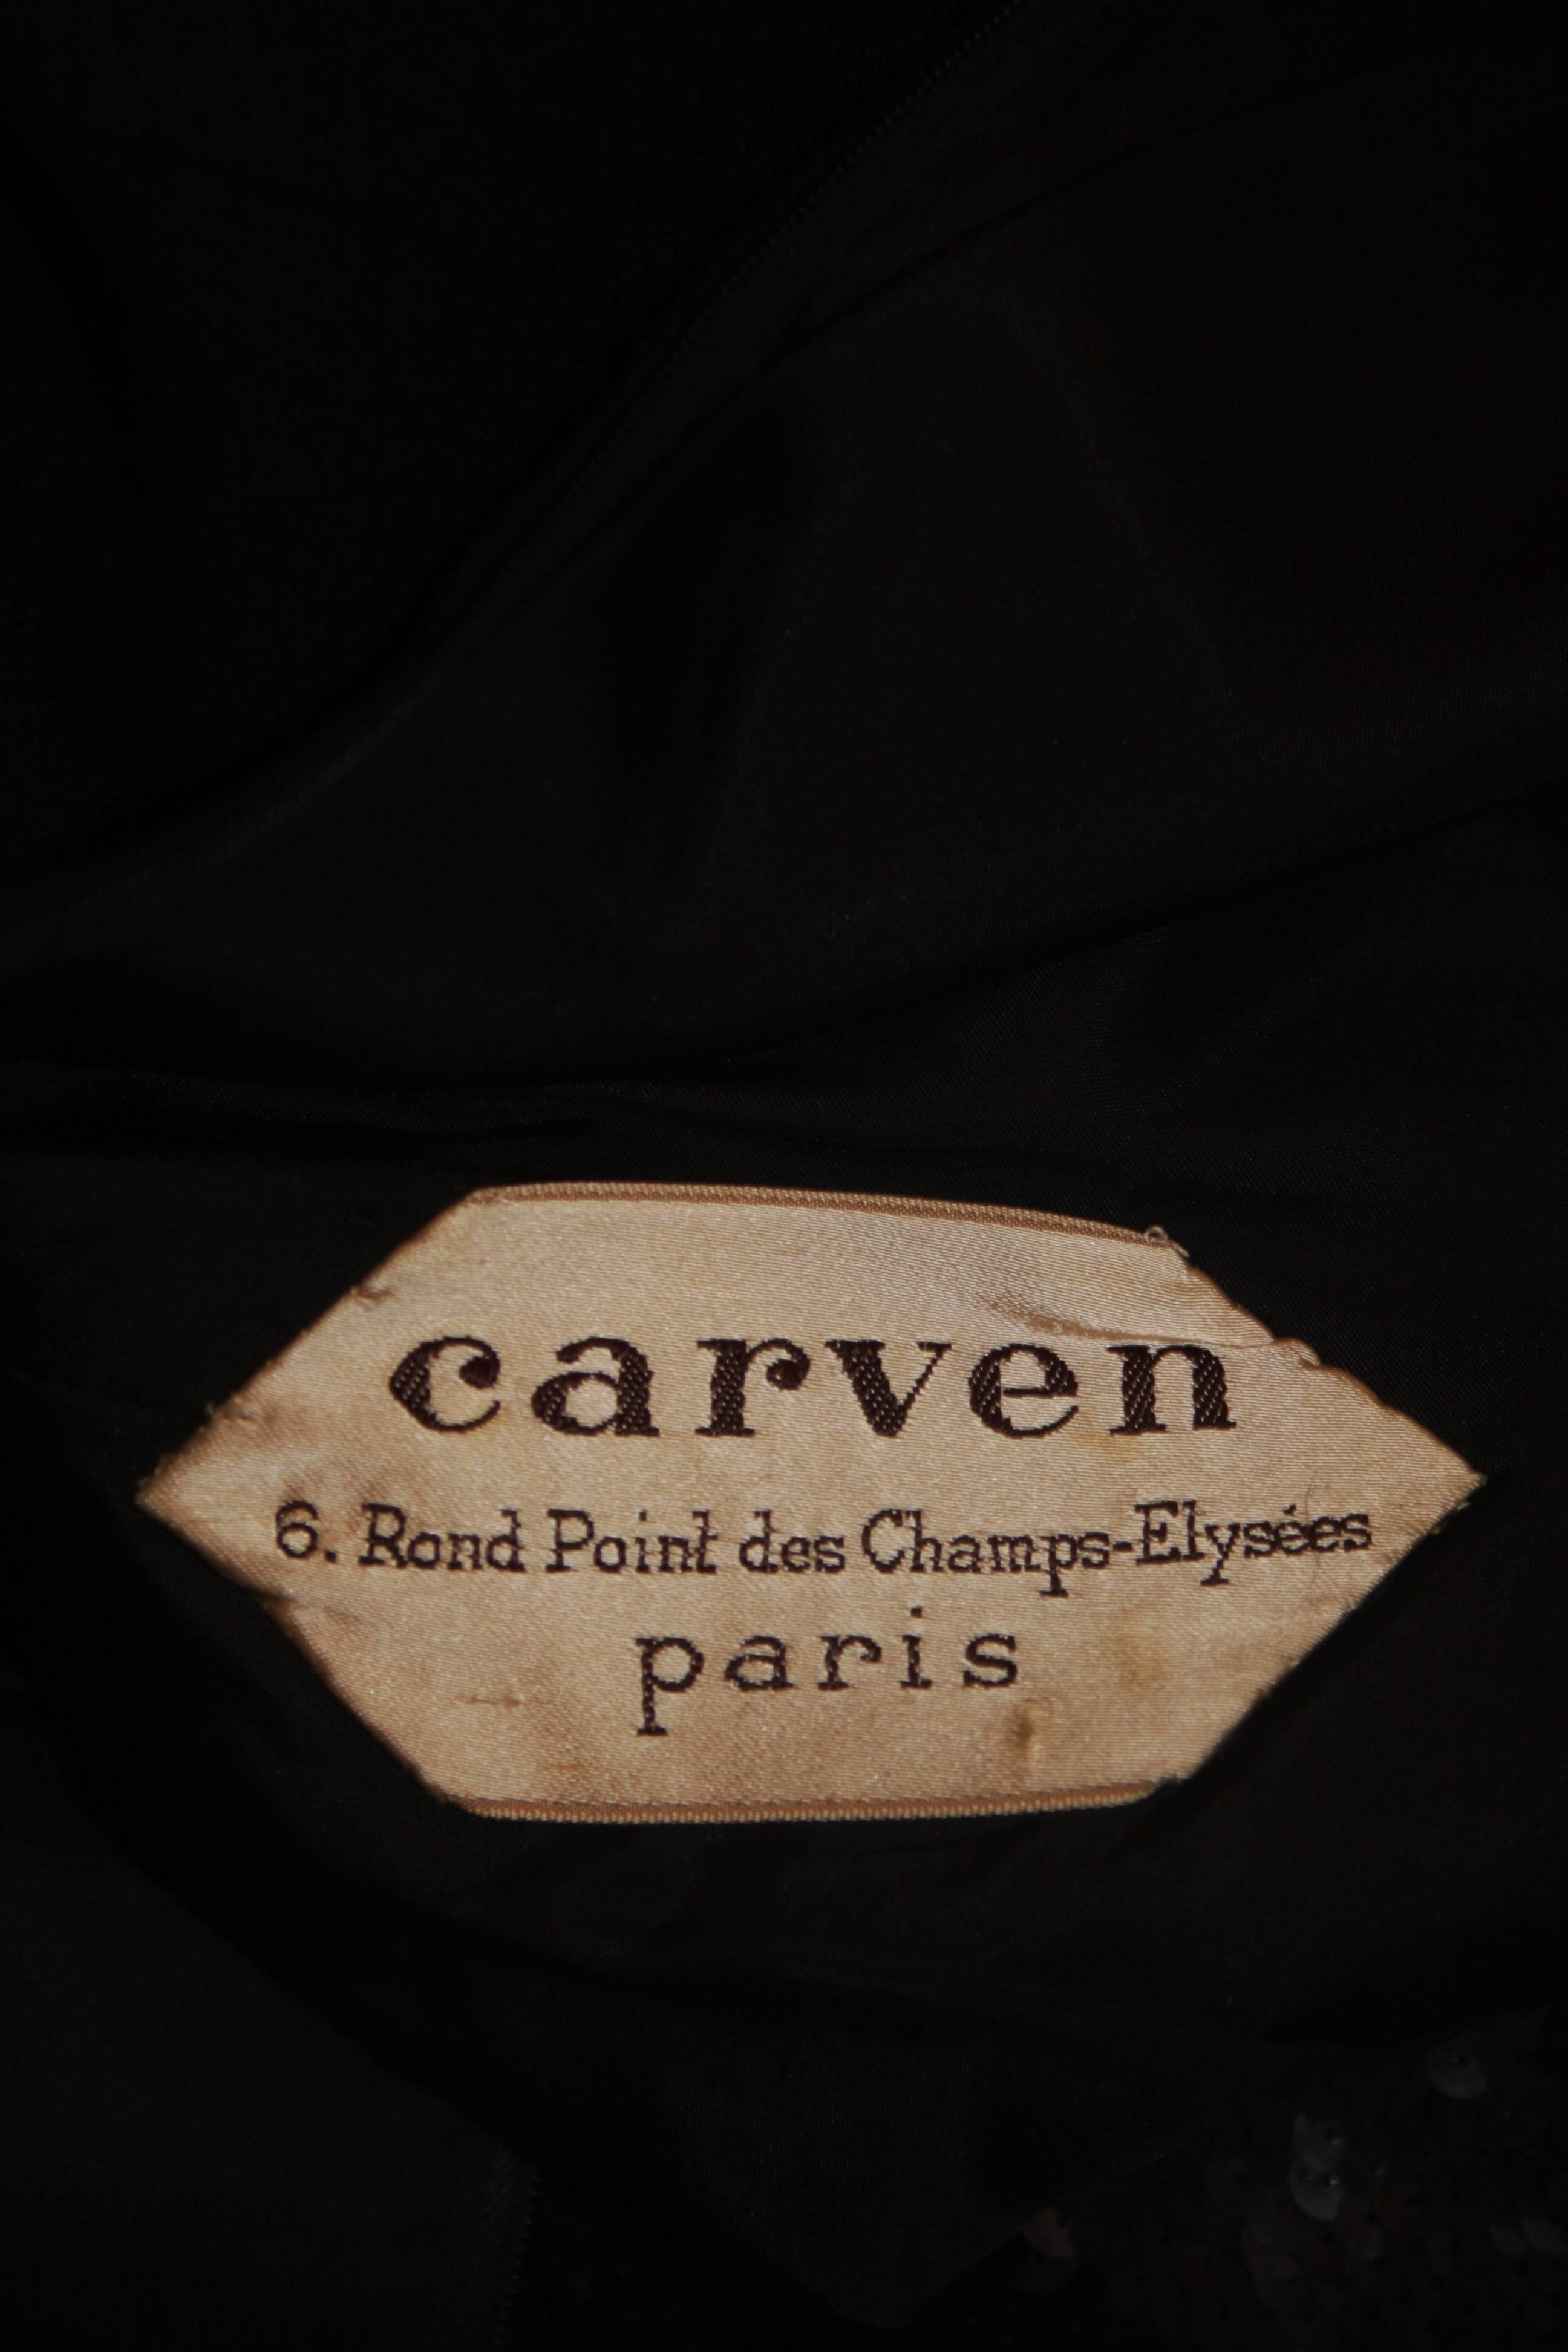 CARVEN COUTURE PARIS 1960's Black Sequin Dress with Structured Shoulders Size 2 For Sale 4